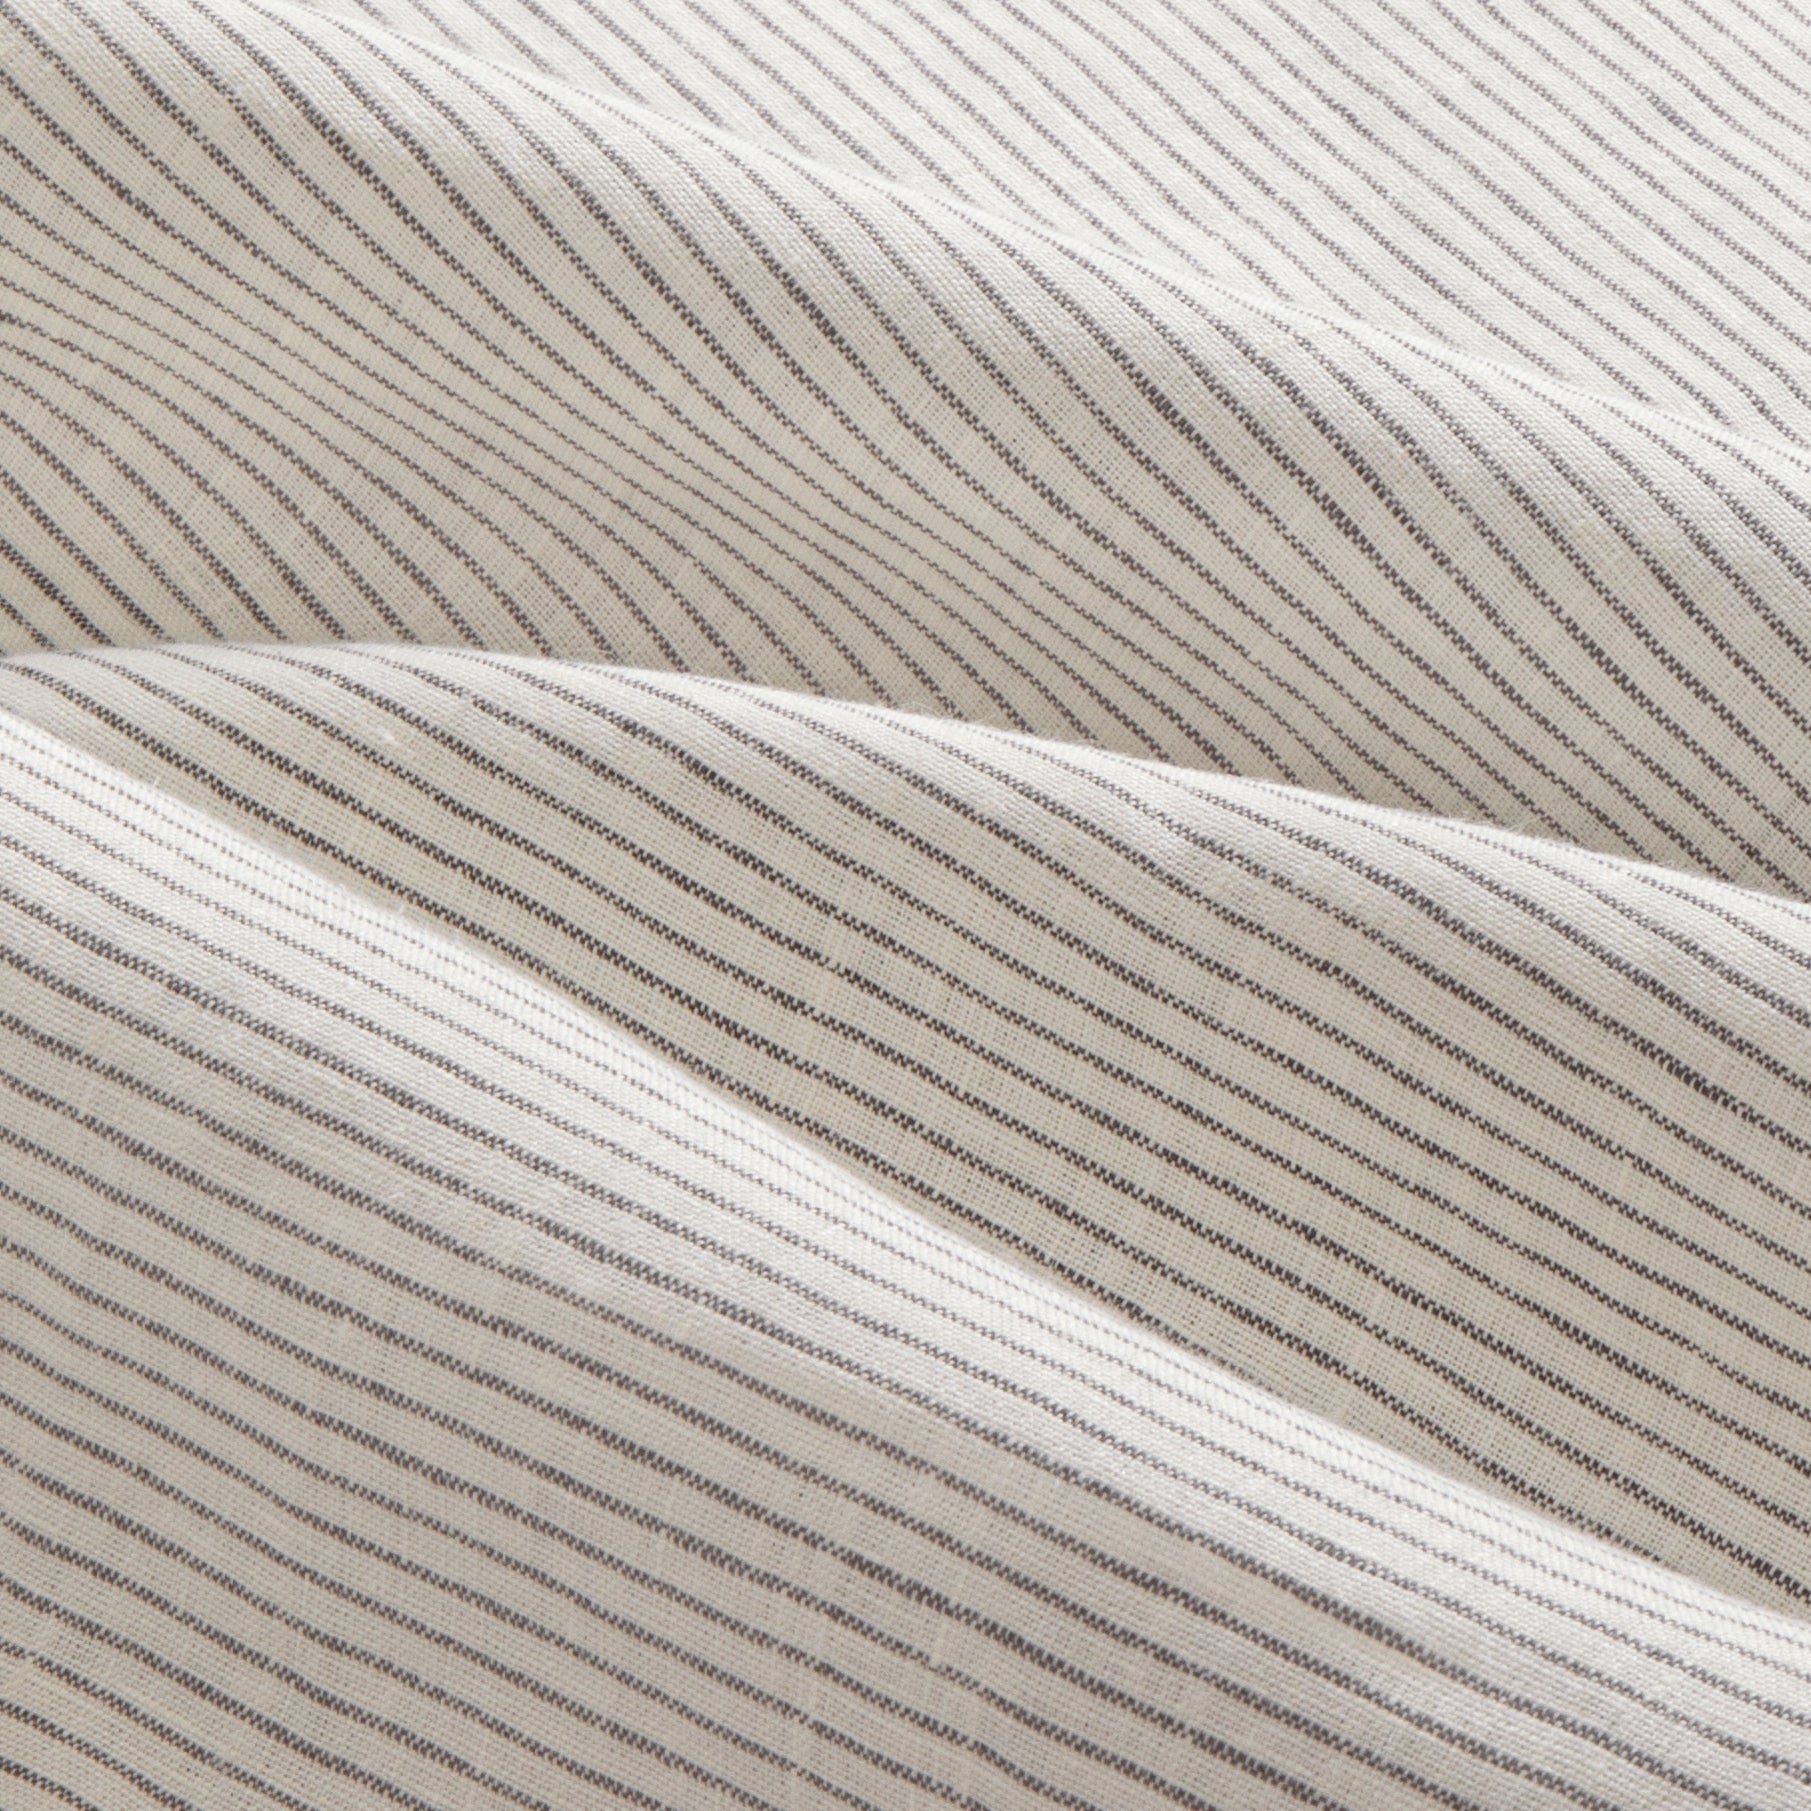 Close up details of Olivia black and white stripe linen sheet set. Black and white striped linen bedsheet set close up.